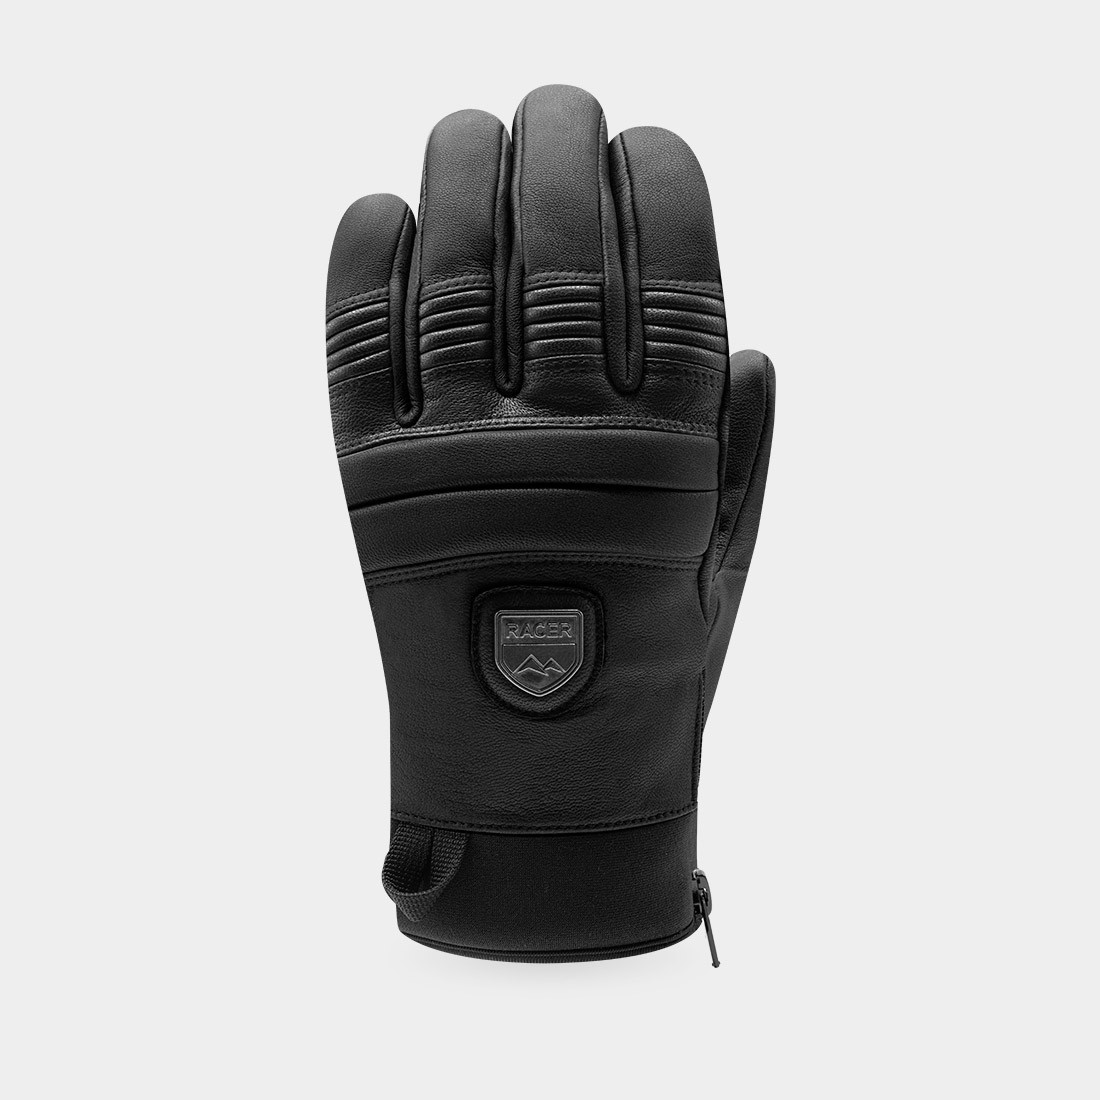 90 LEATHER 2 - leather ski gloves